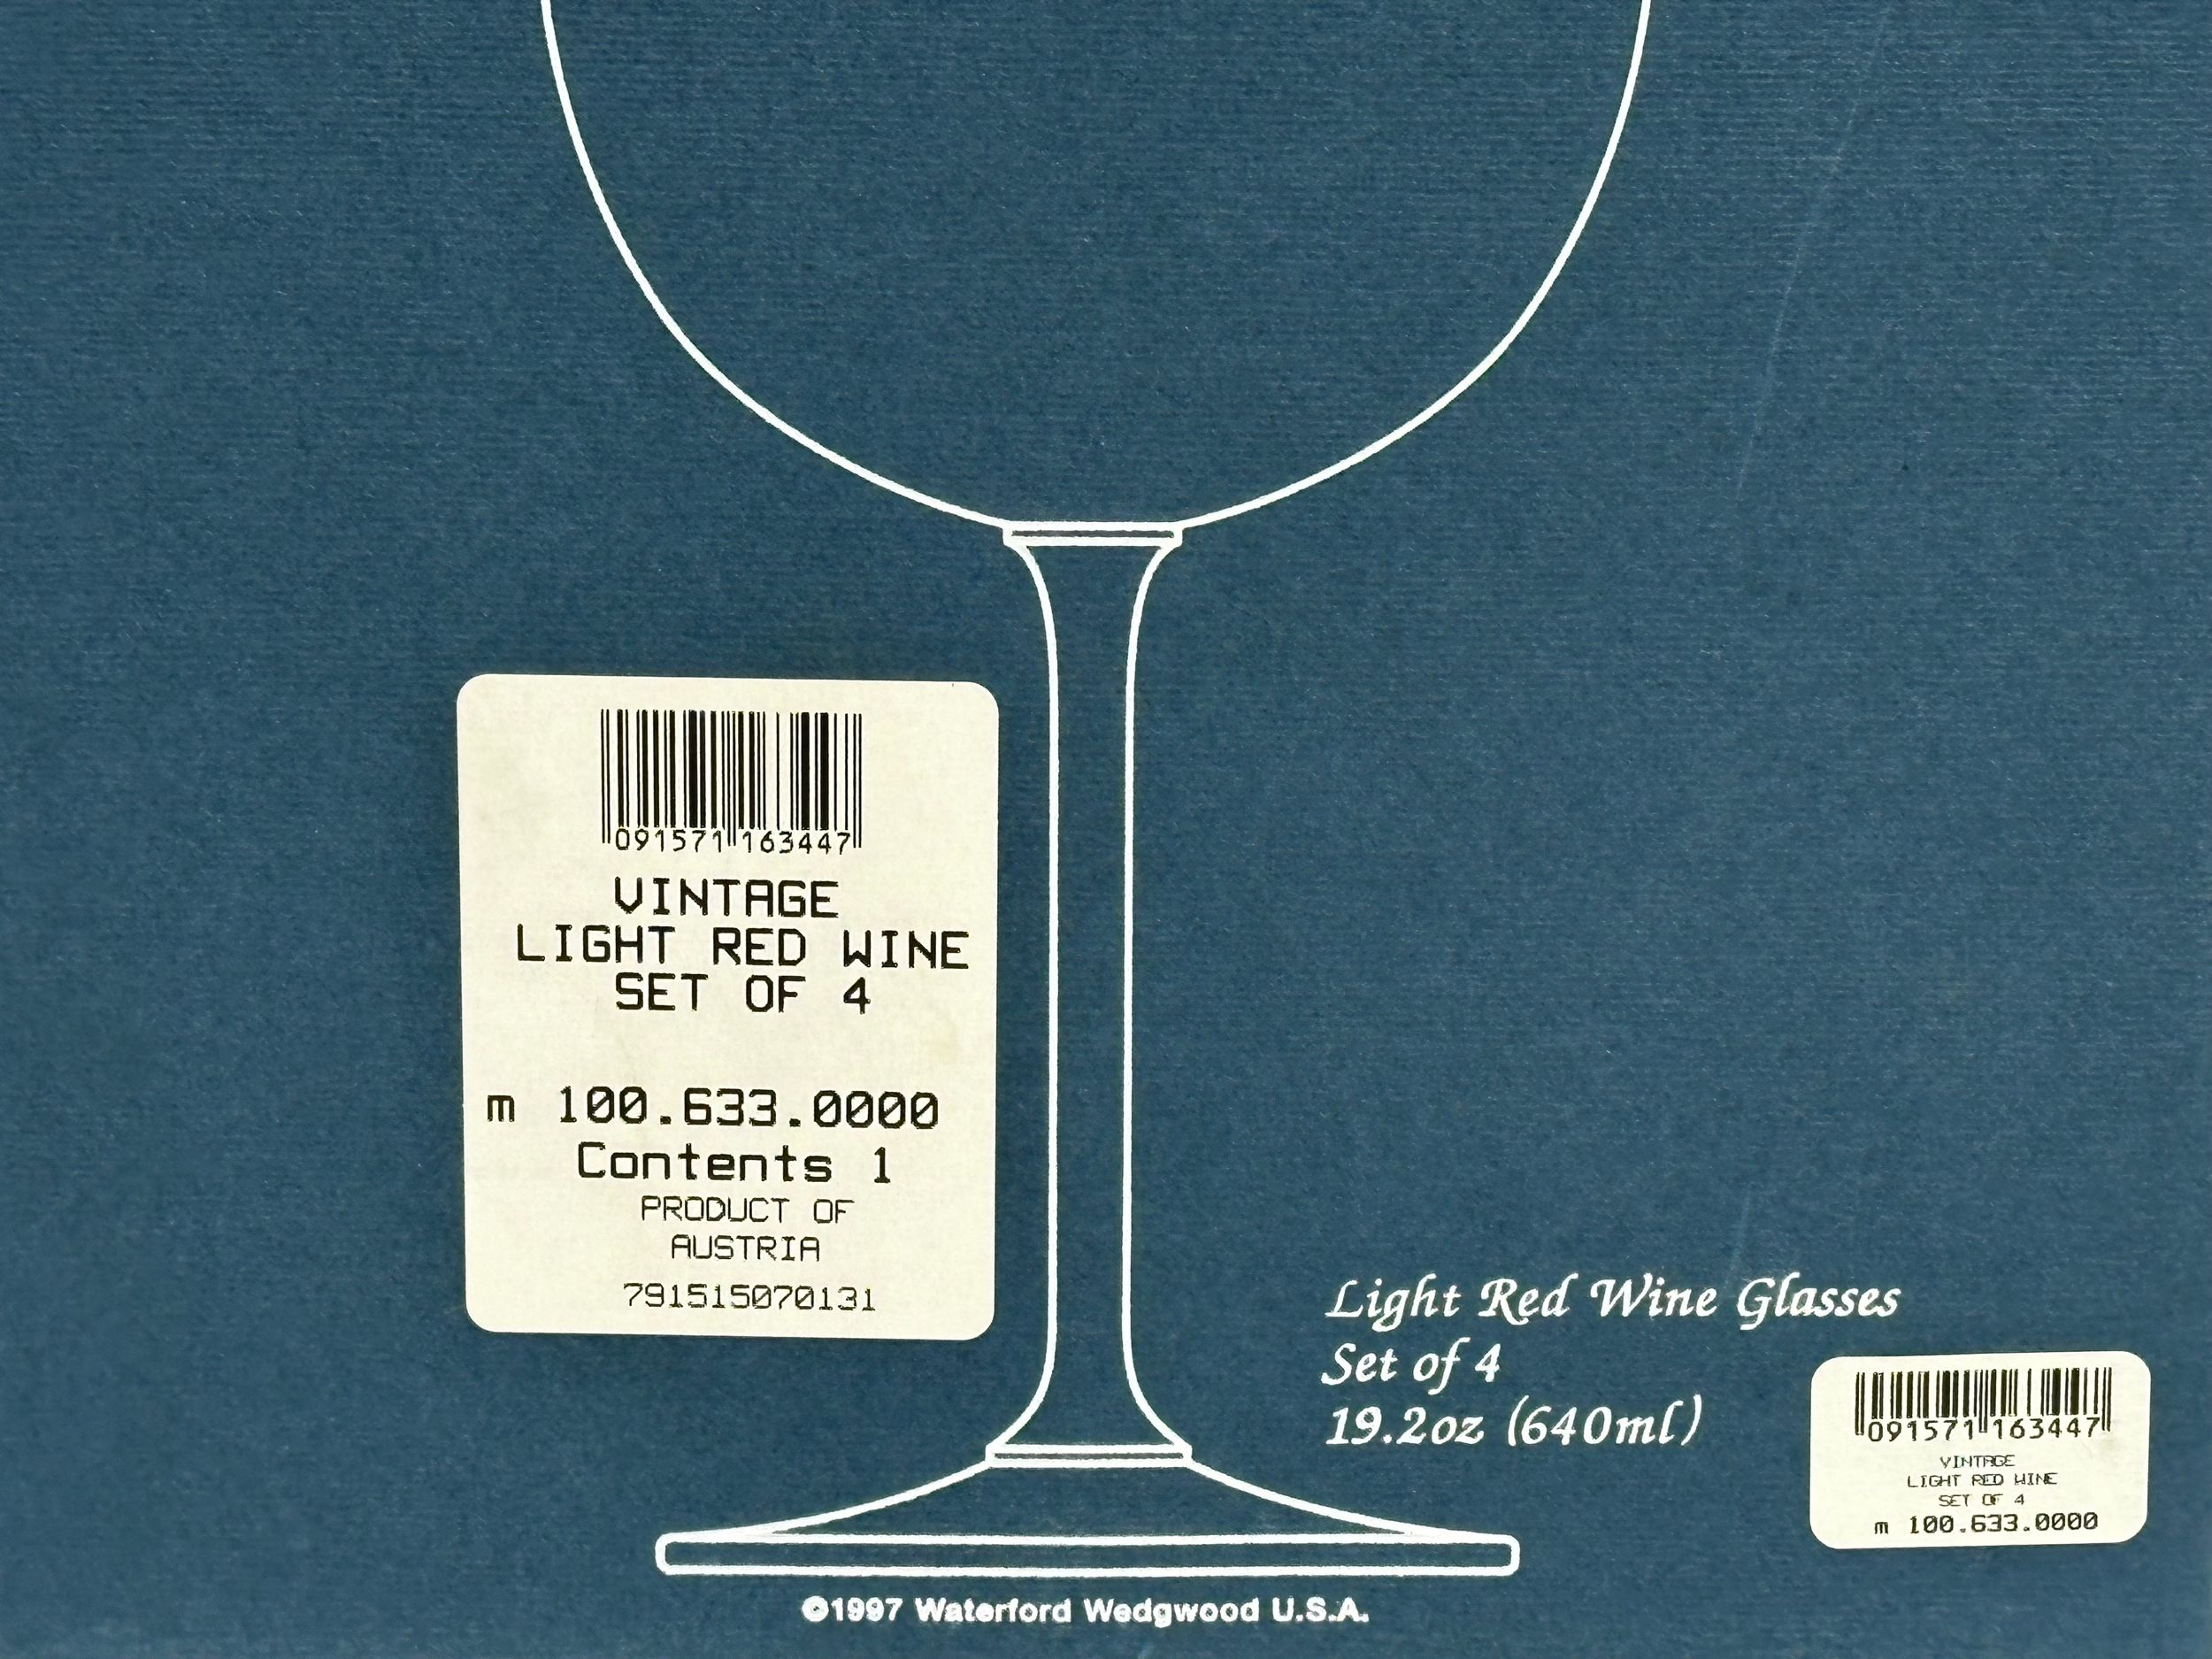 Waterford Marquis. The ‘Vintage Tasting Collection’ wine glasses by Waterford Marquis. Glasses - Image 4 of 4